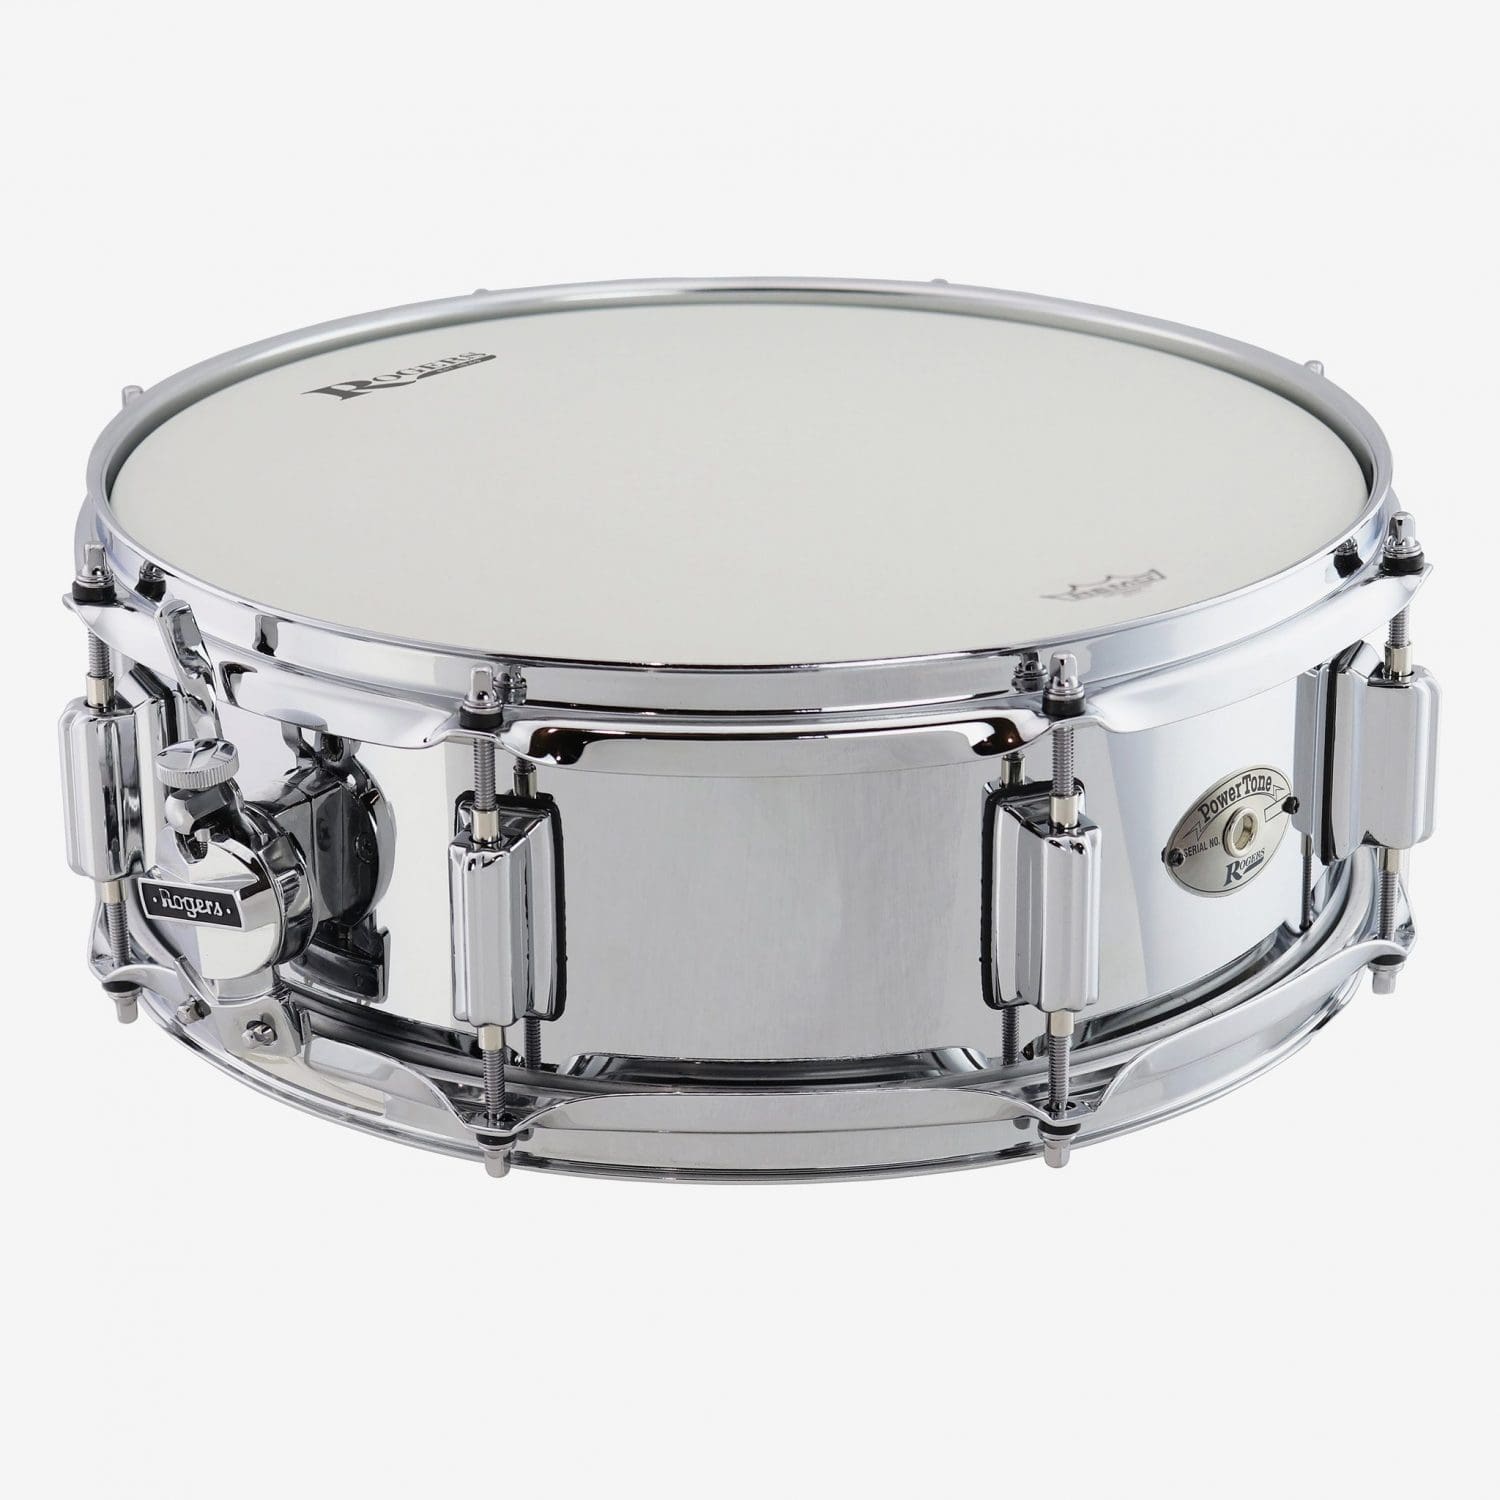 Powertone Steel Snare Drum